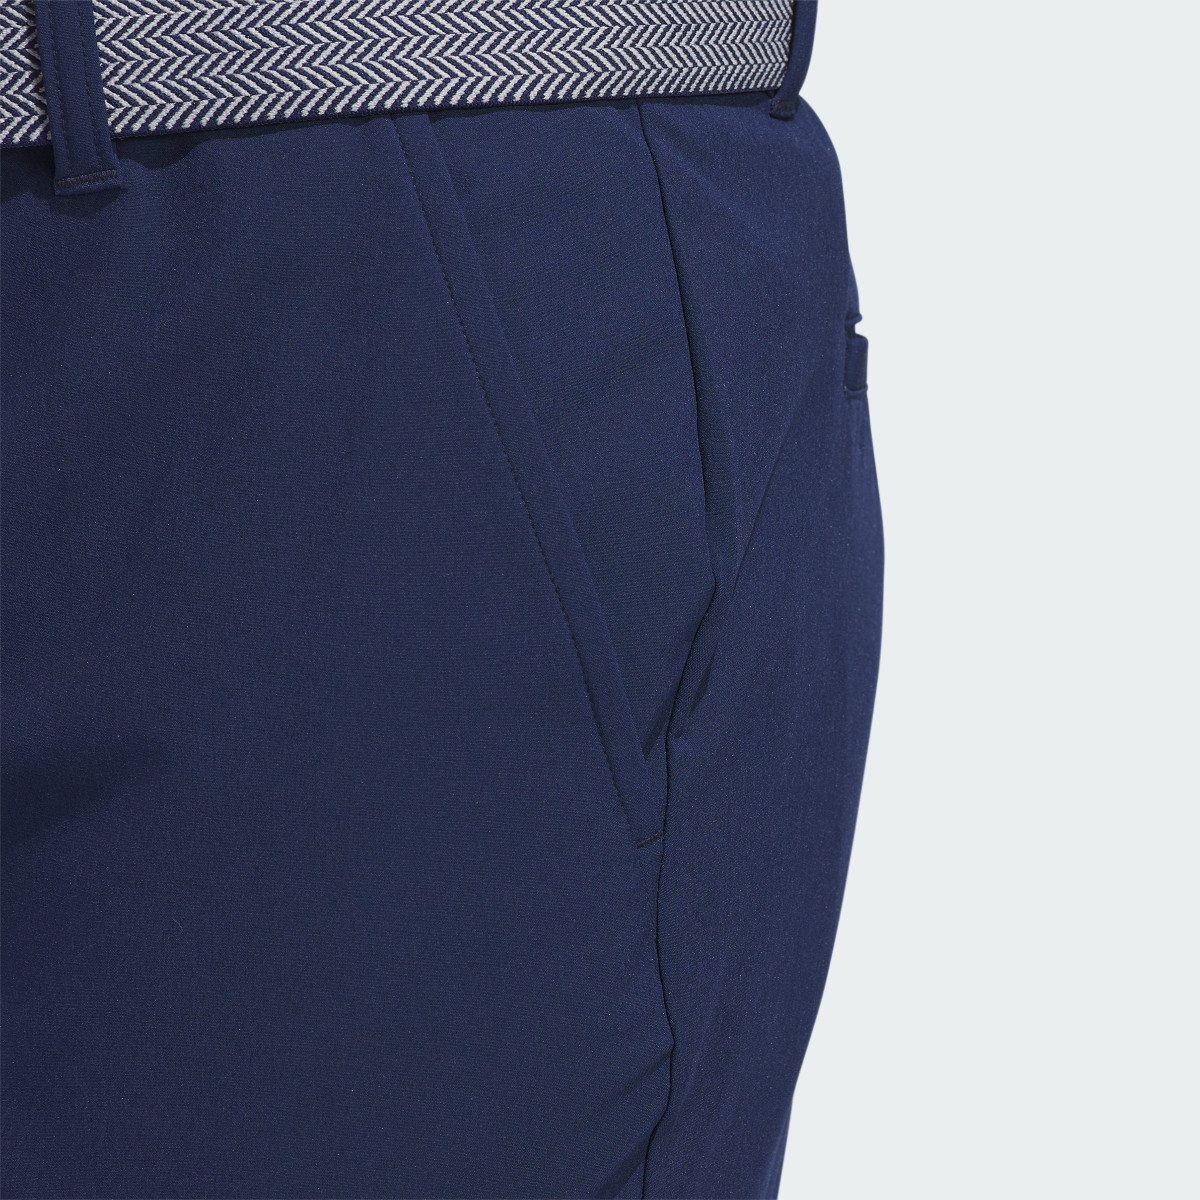 Adidas Pants de Golf Ultimate365 Pierna Cónica. 6